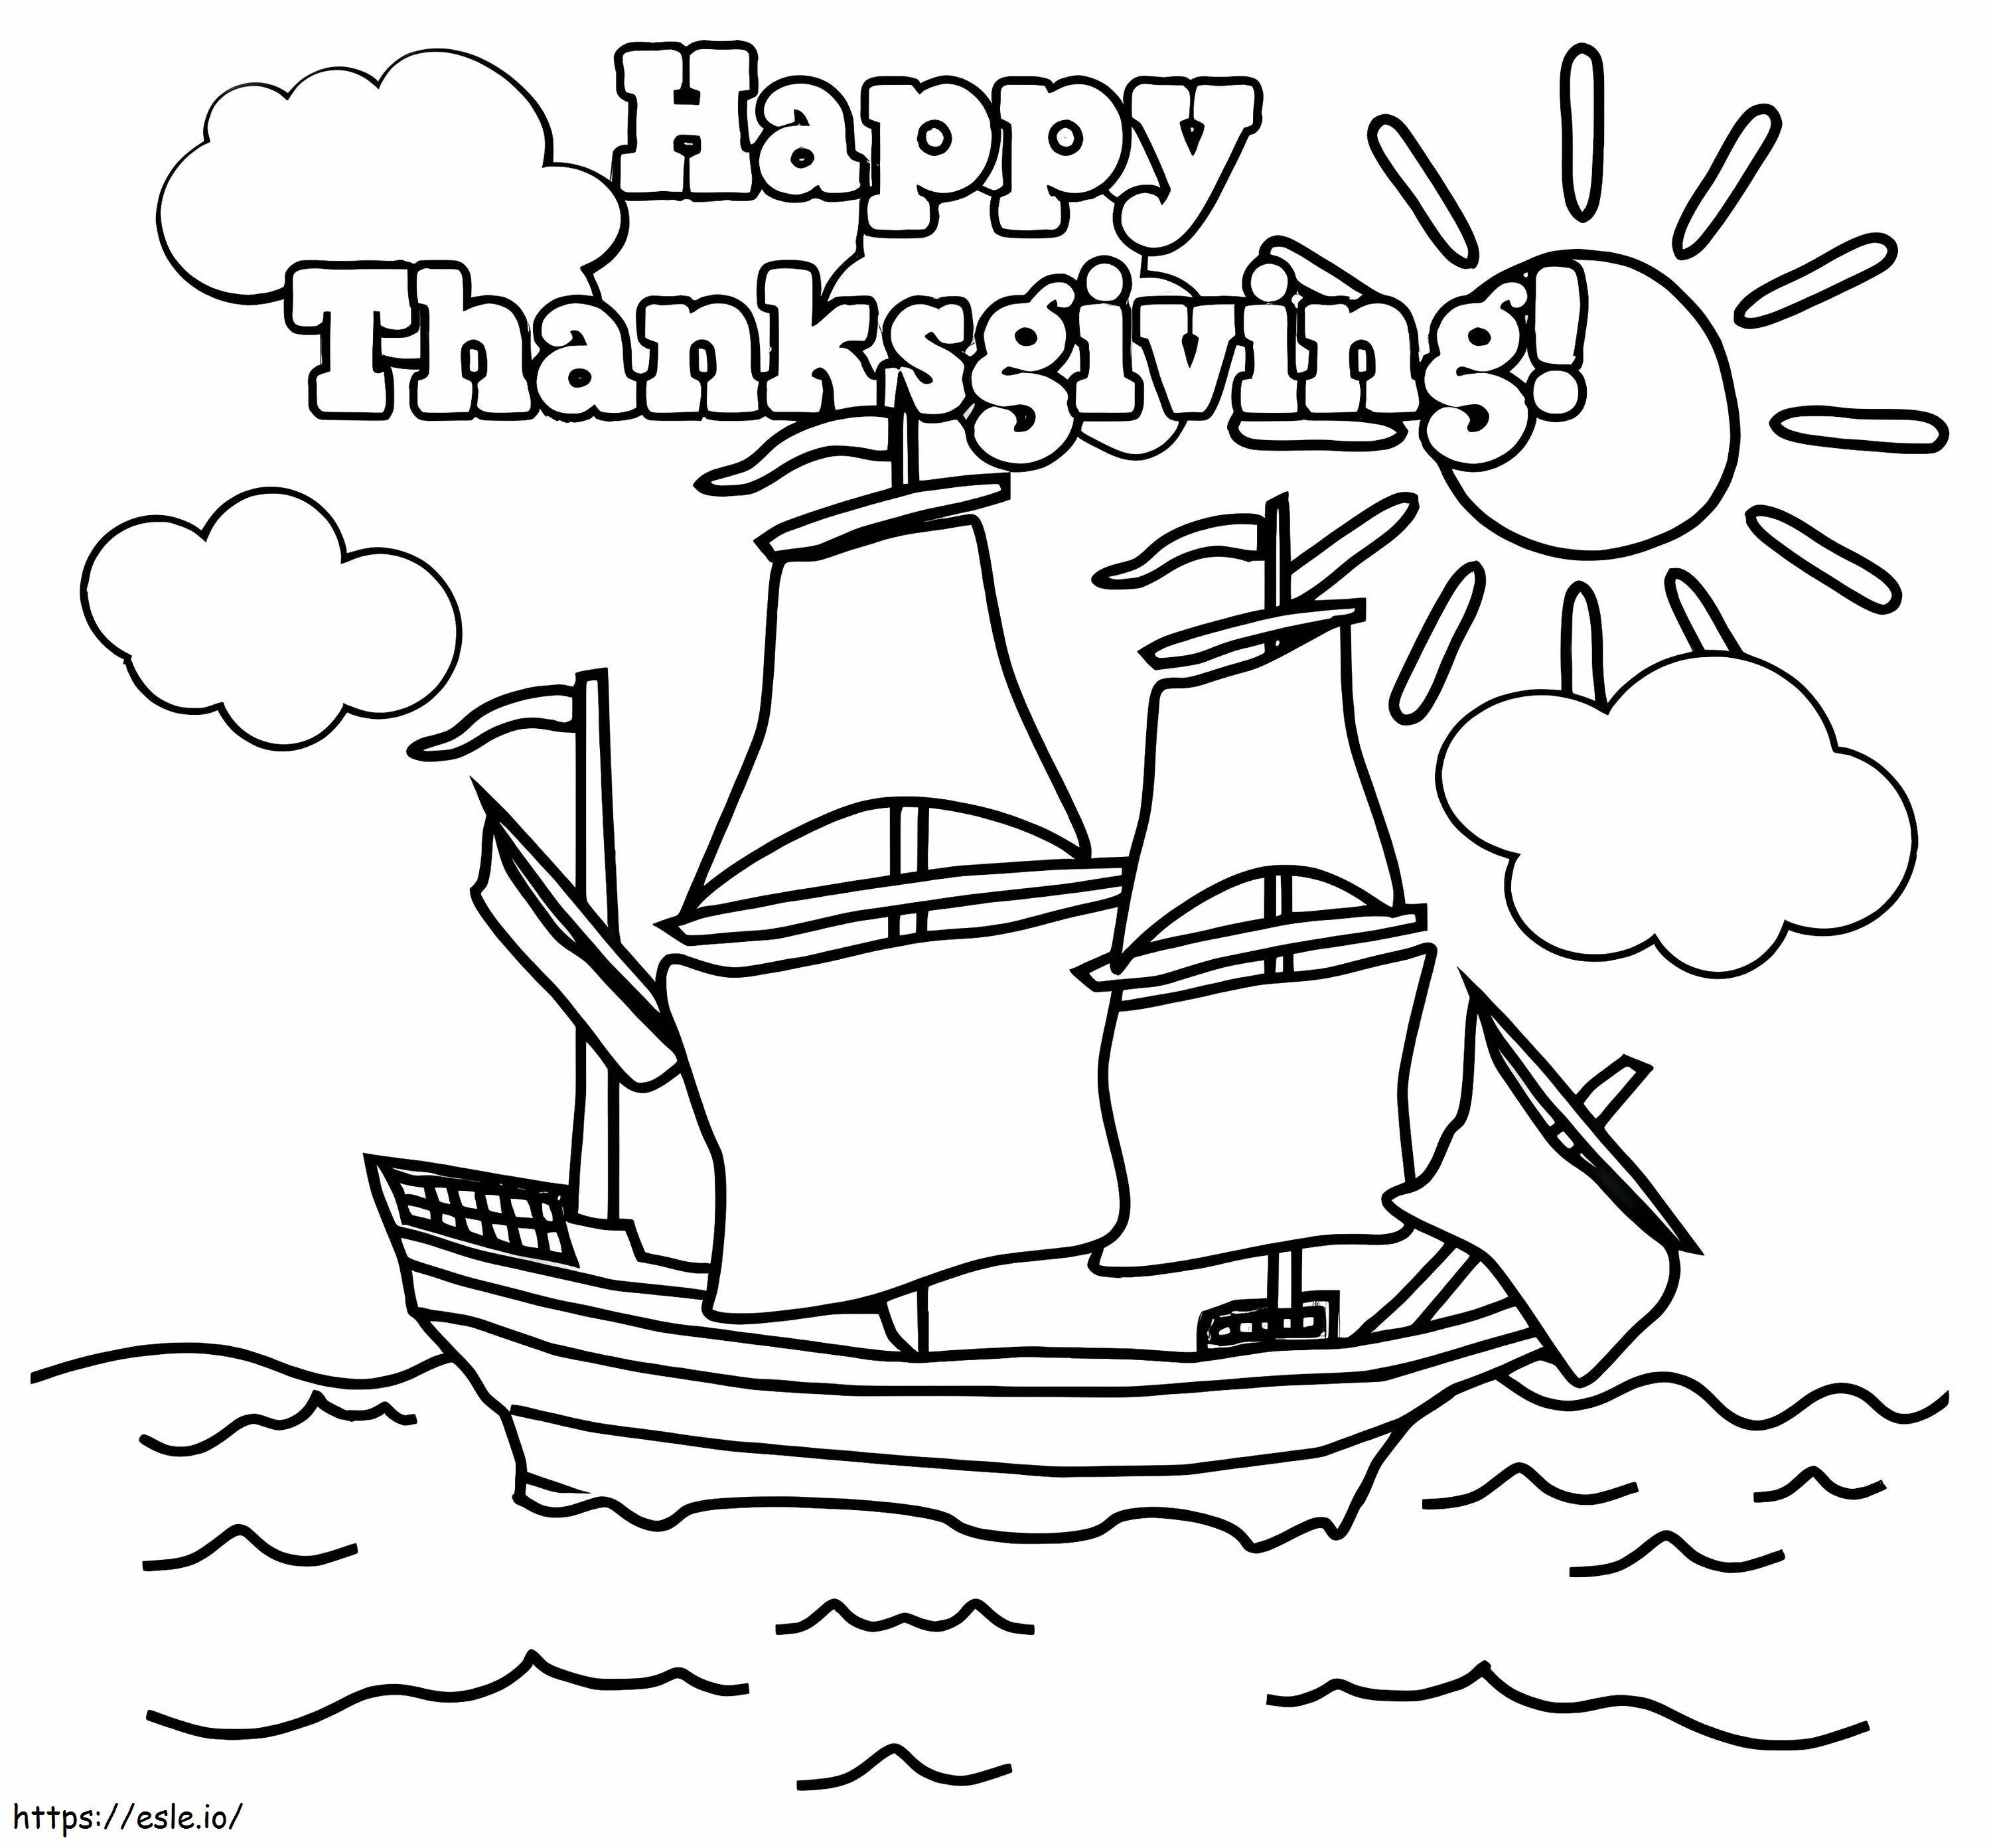 Mayflower de Acción de Gracias para colorear